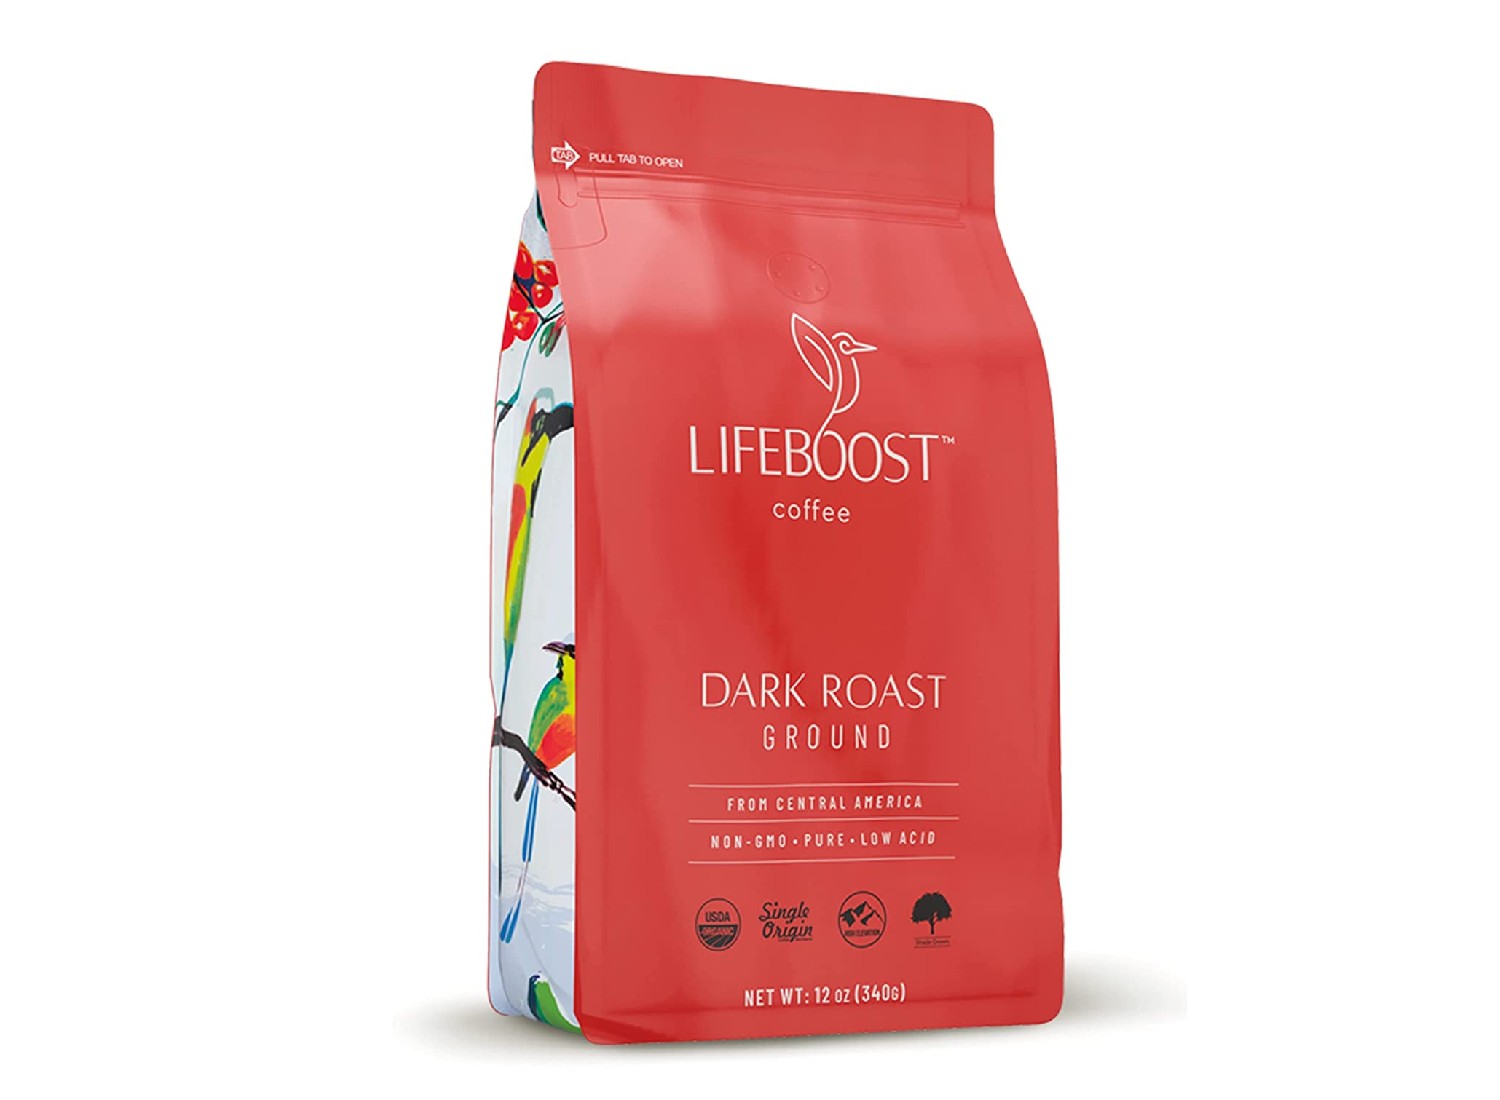 The LIFEBOOST Coffee Dark Roast Ground sold on Amazon